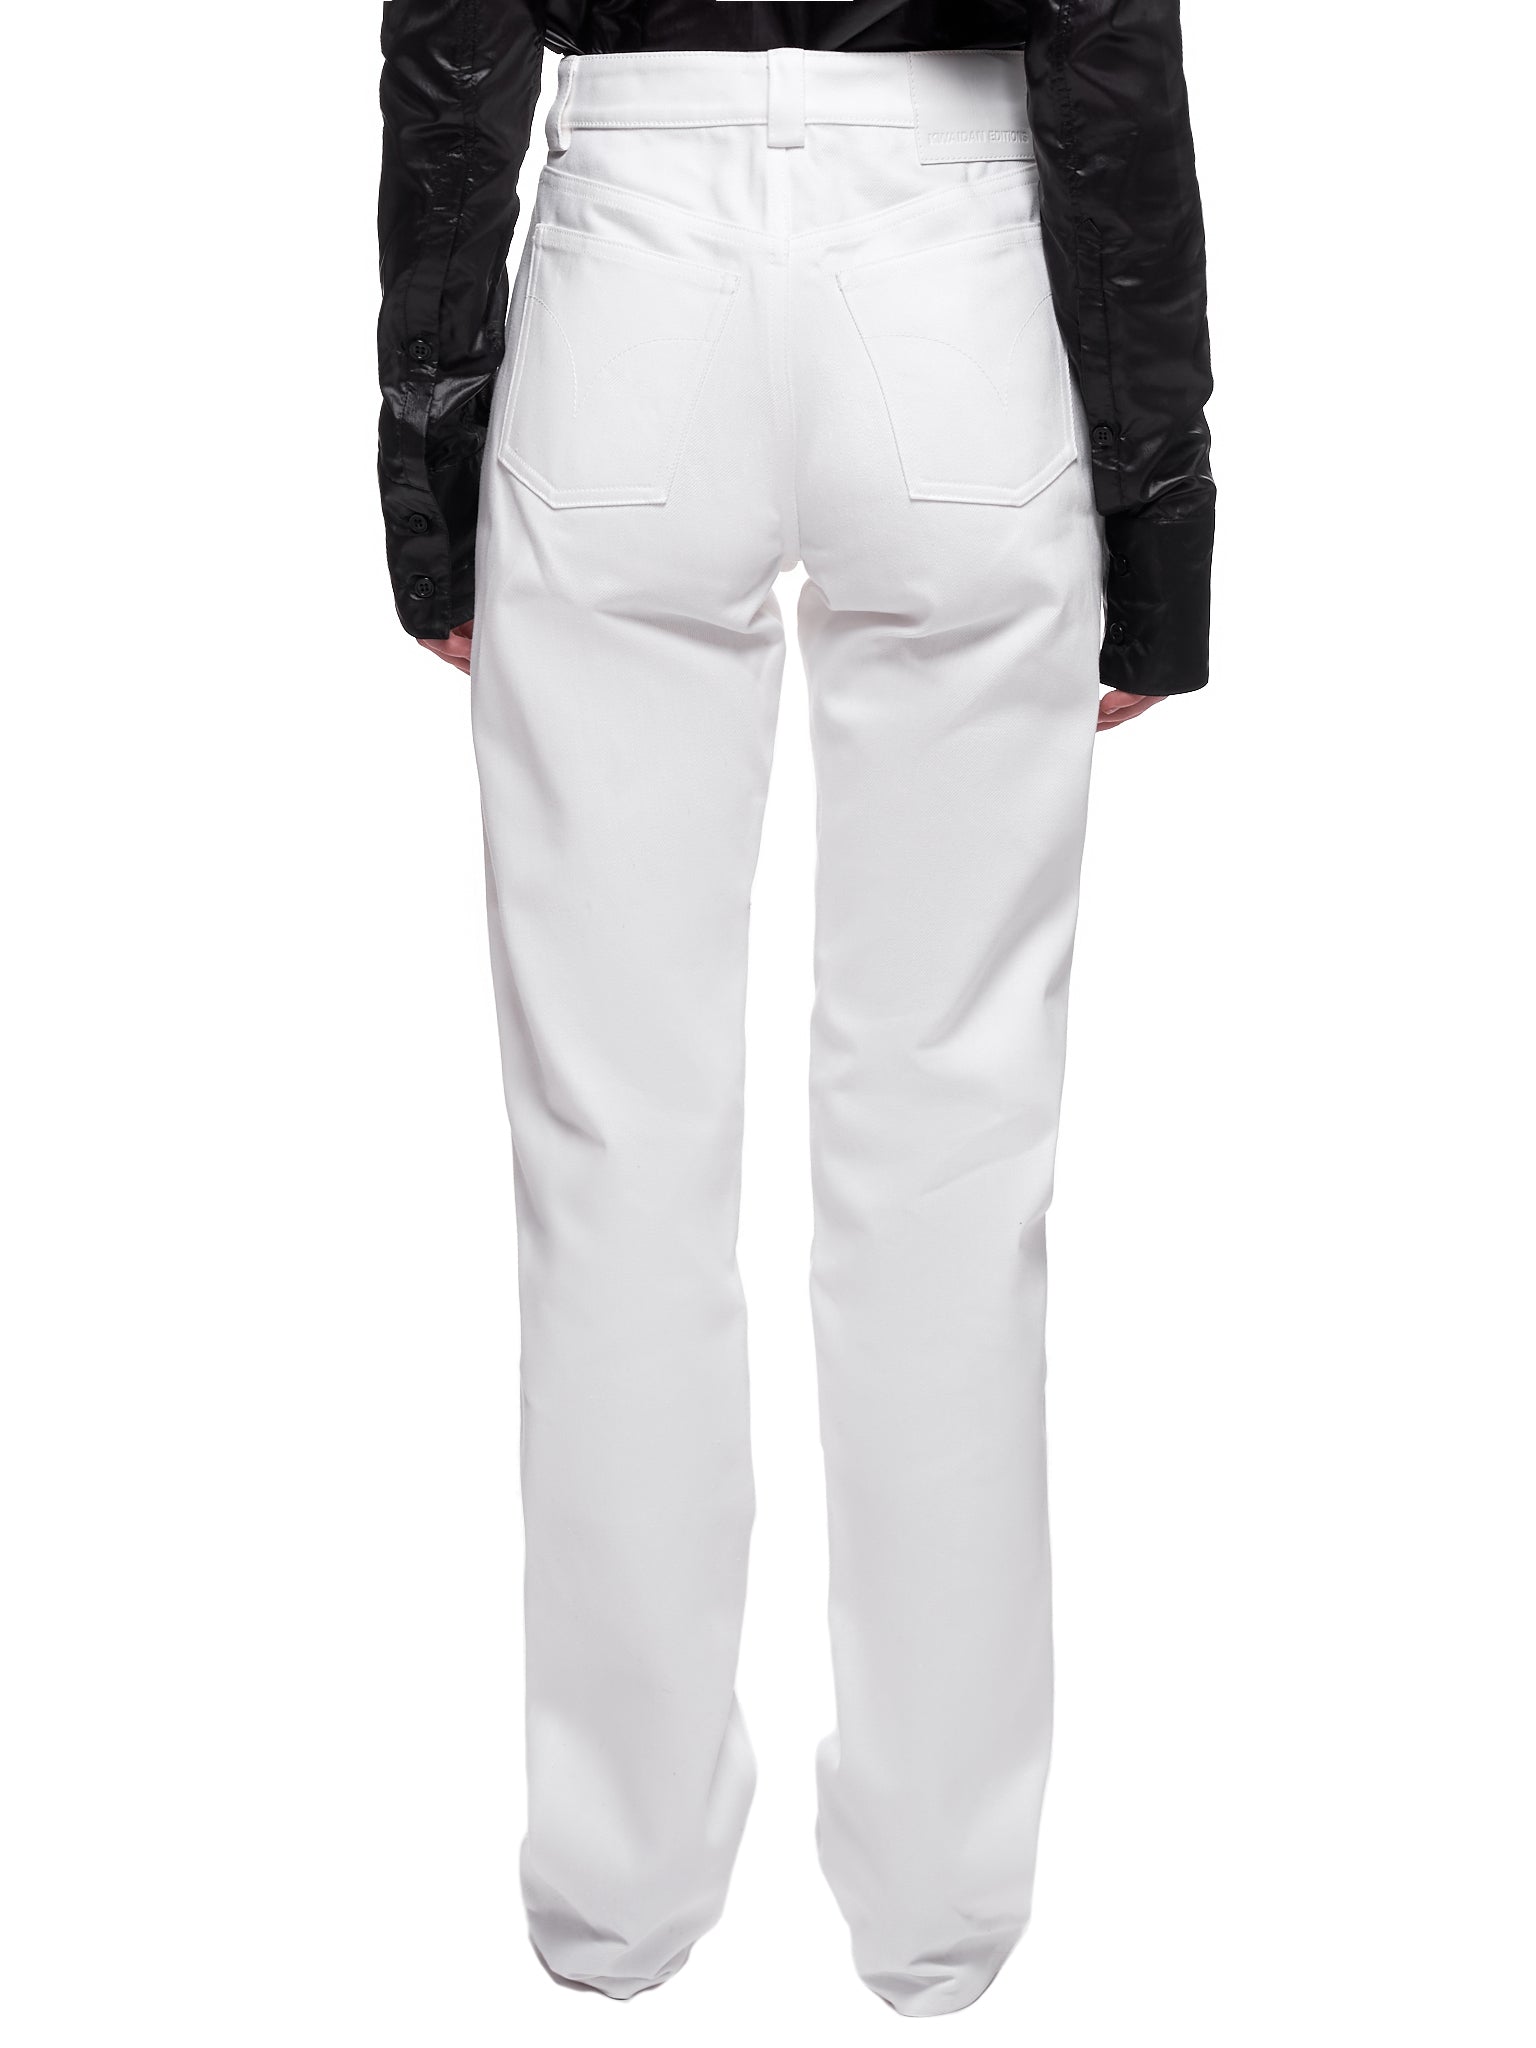 Denim Jeans (WP028W-DE-WHITE)